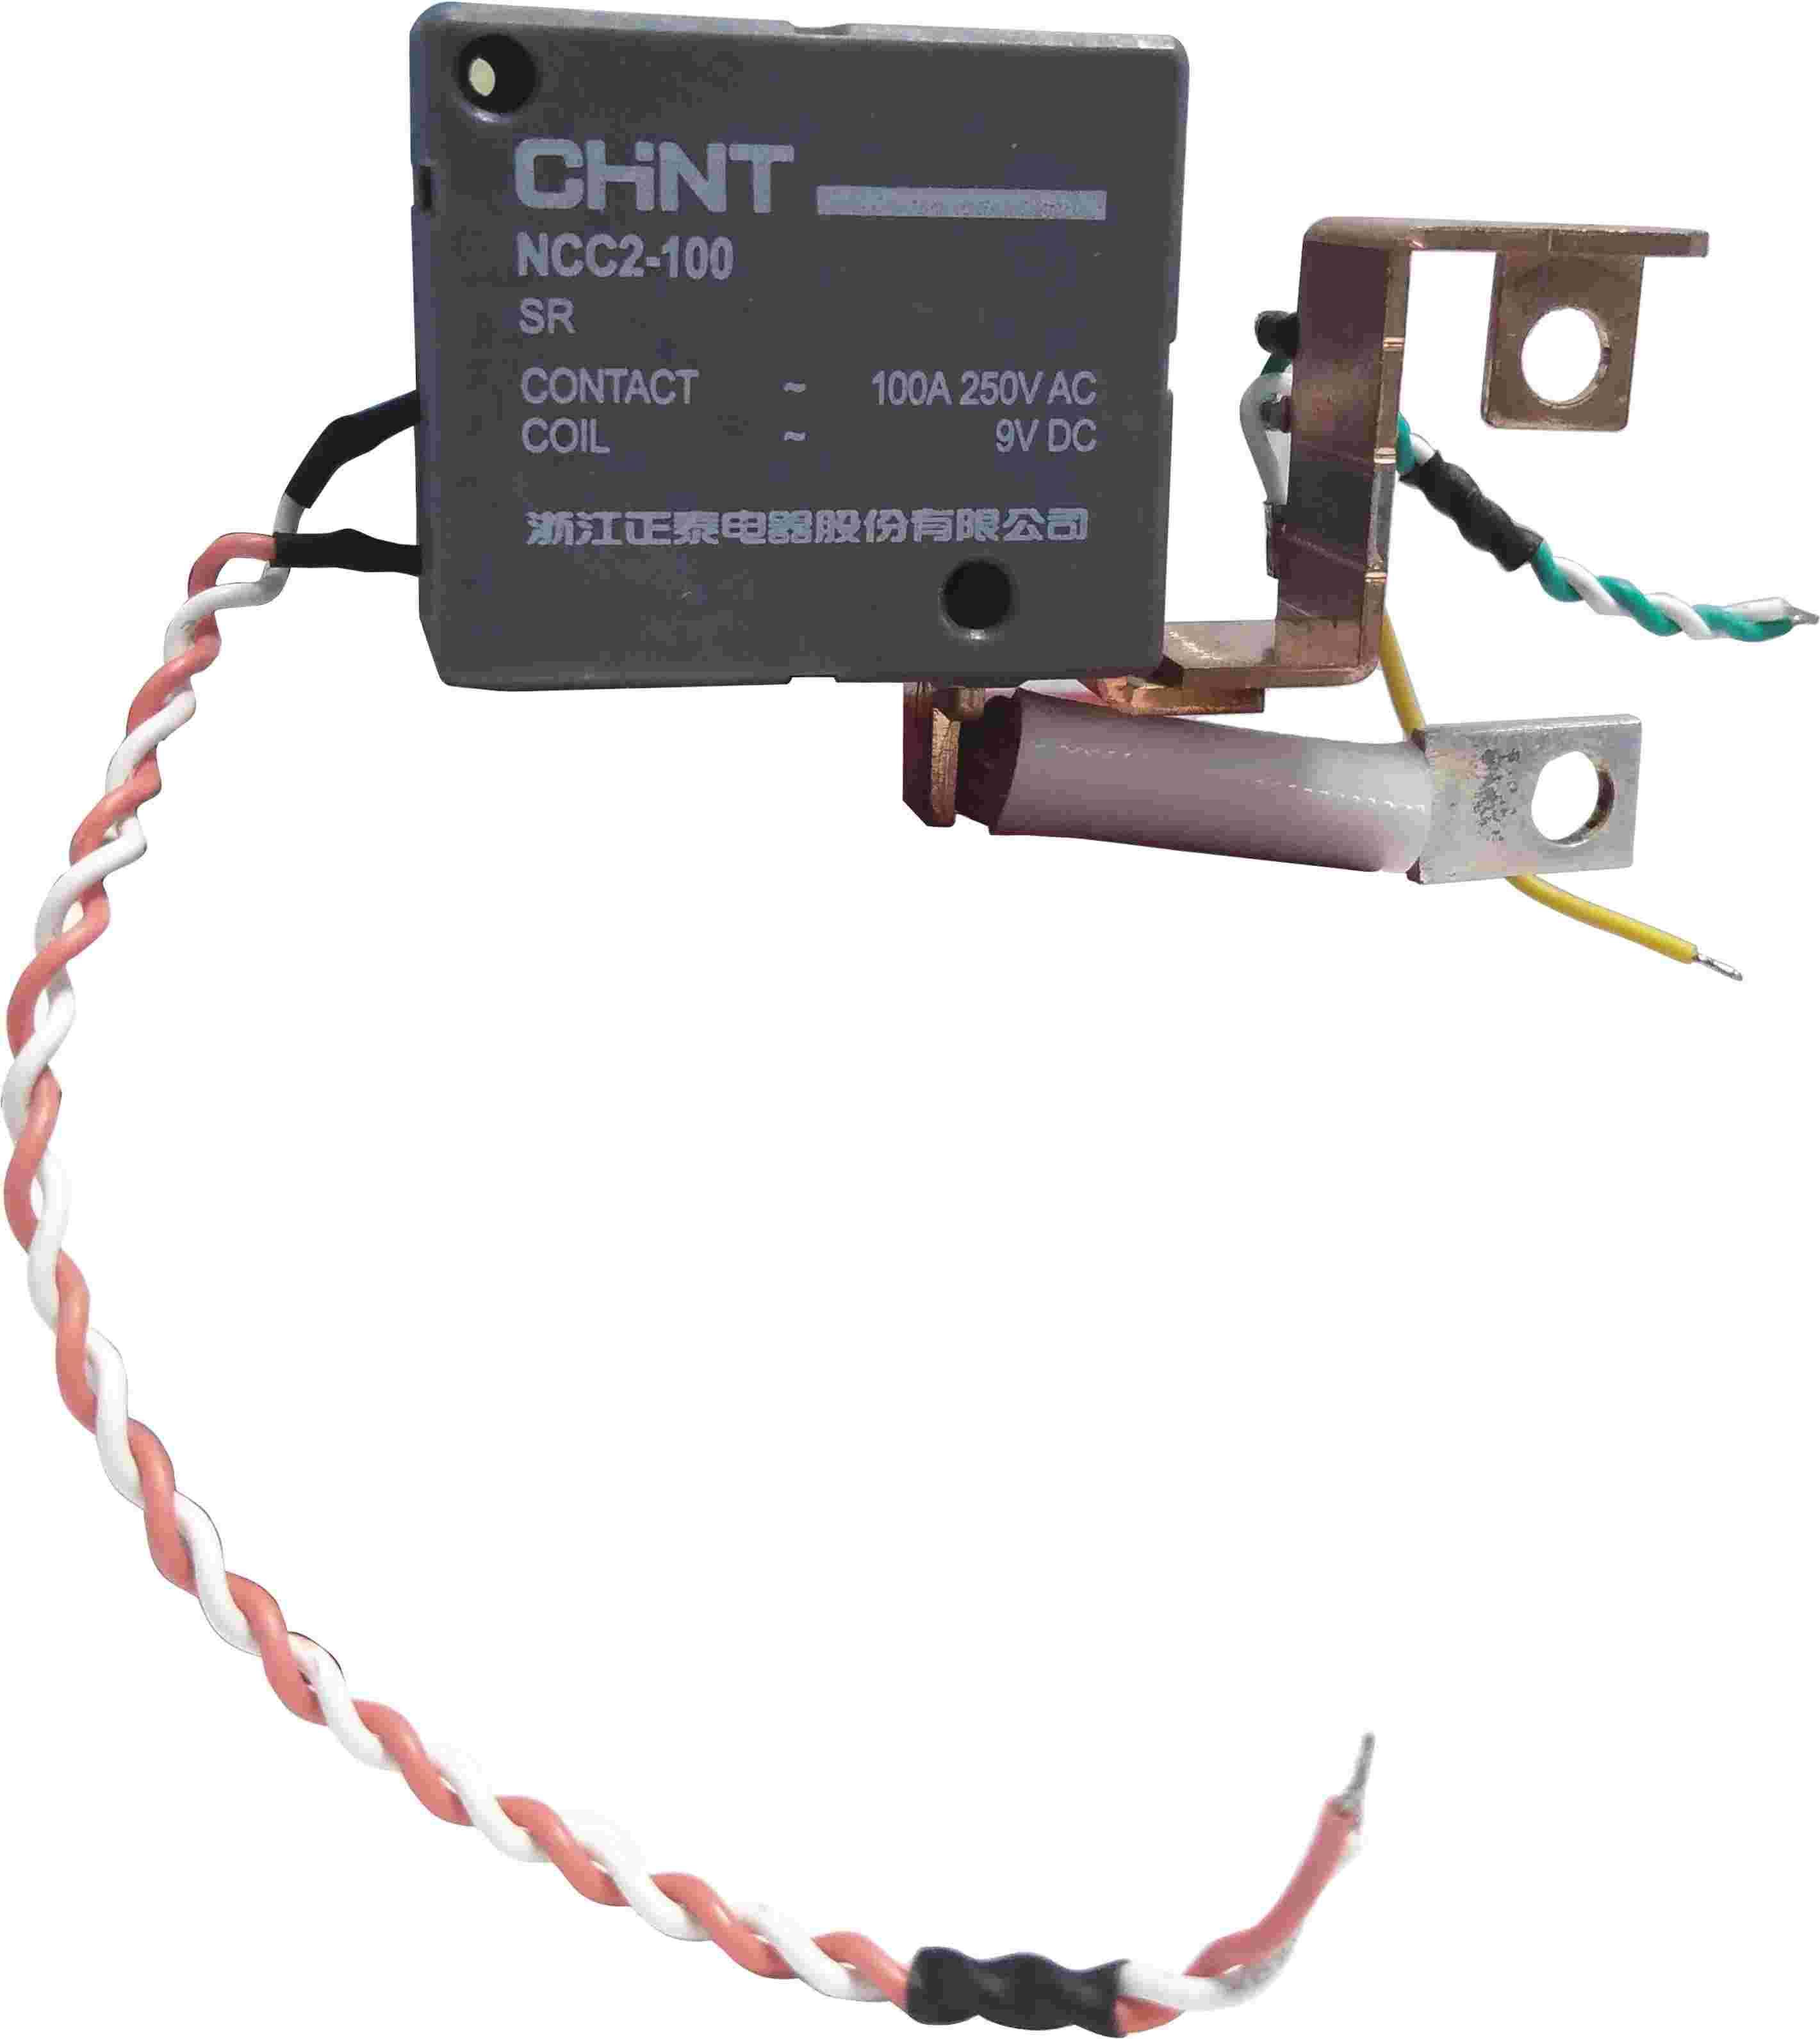 NCC2-100 磁保持继电器侧俯图.png